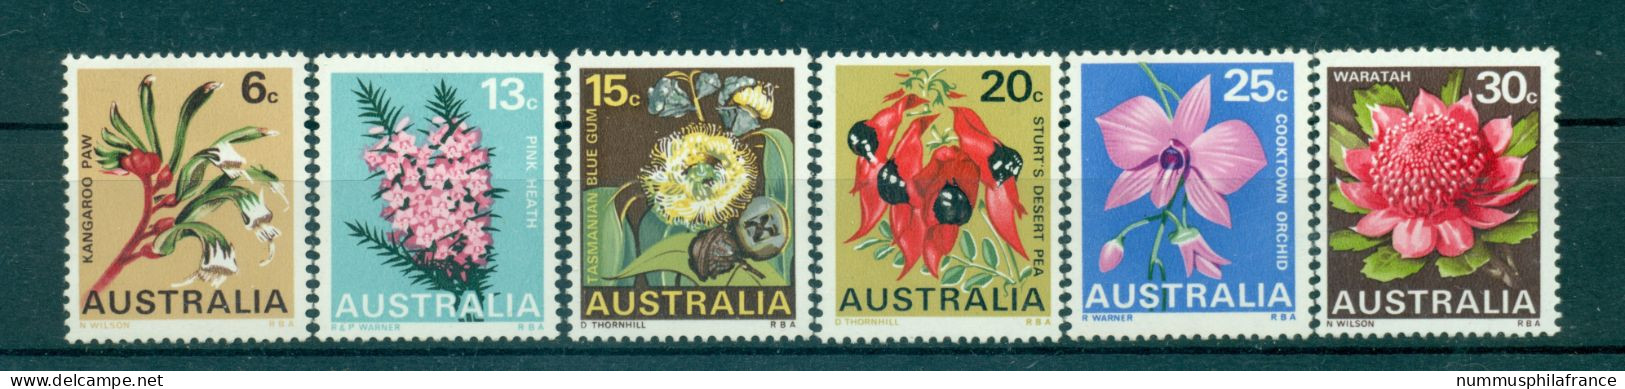 Australie 1968 - Y & T N. 367/72 - Série Courante (Michel N. 398/403) - Mint Stamps